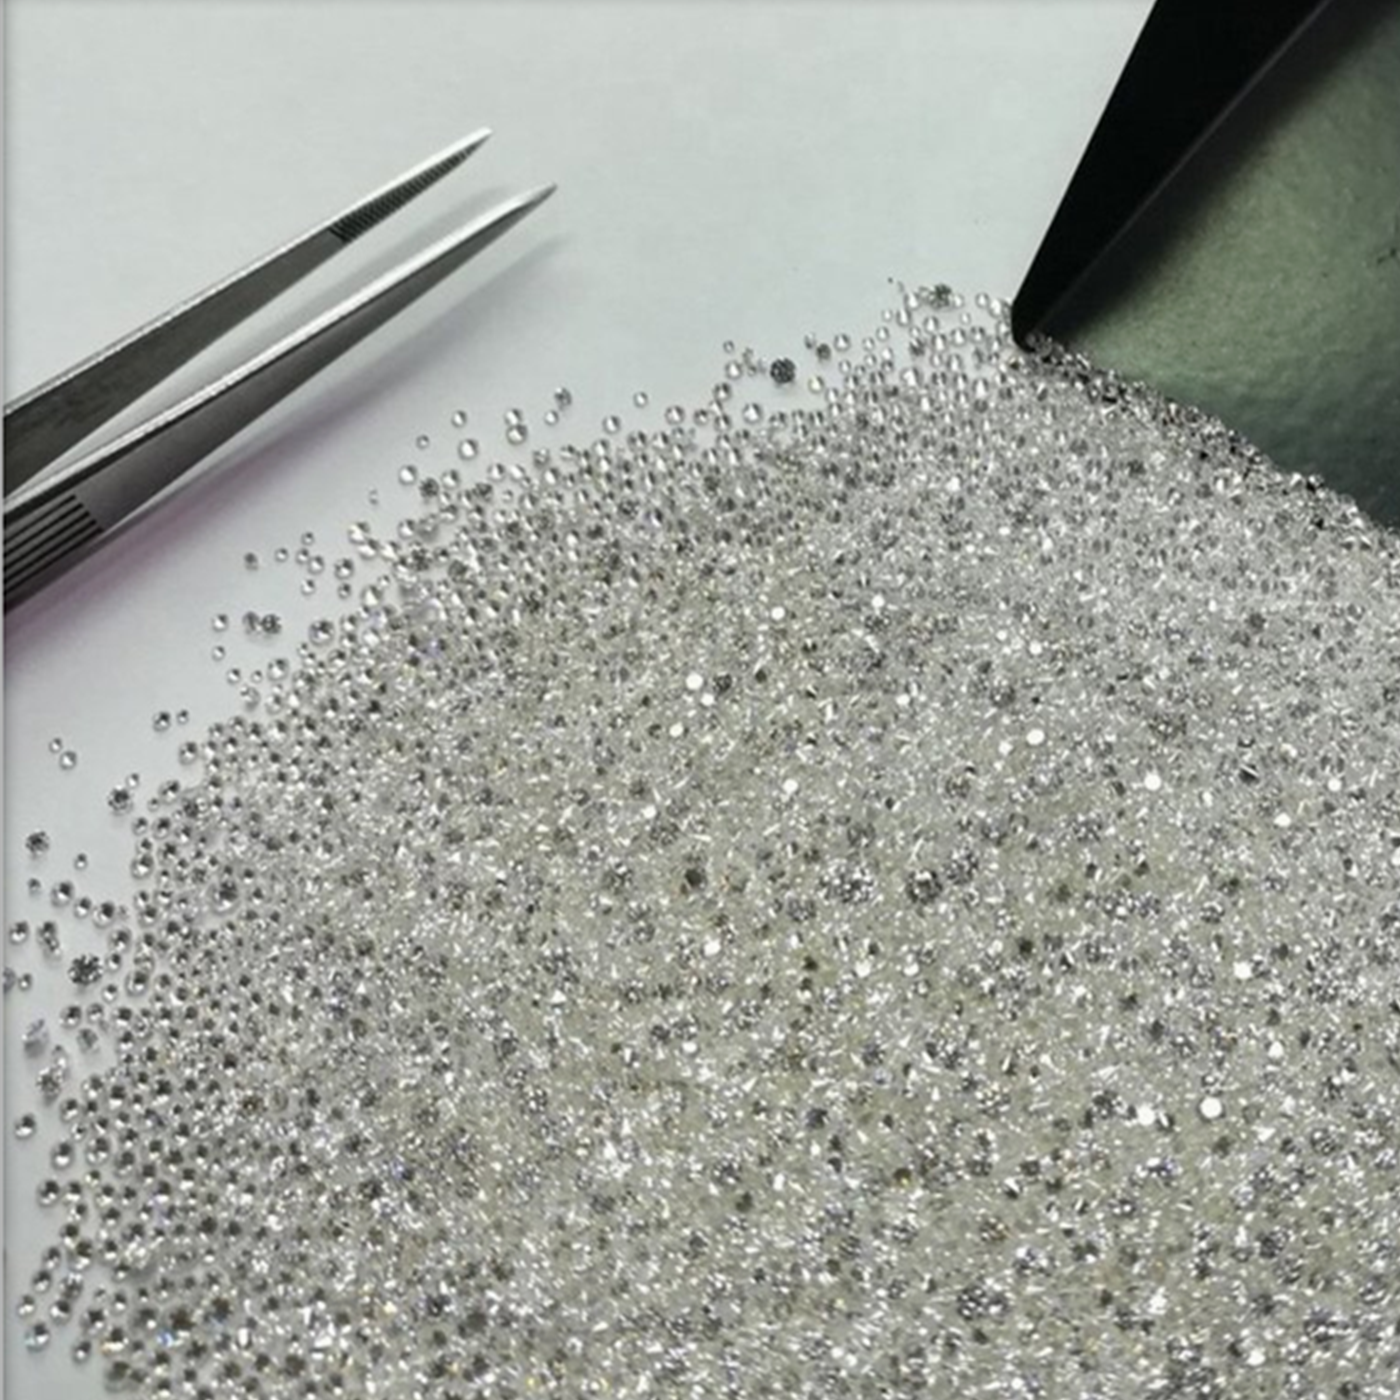 Cvd Diamond 1.15mm to1.20m GHI VS SI Round Brilliant Cut Lab Grown HPHT Loose Stones TCW 1